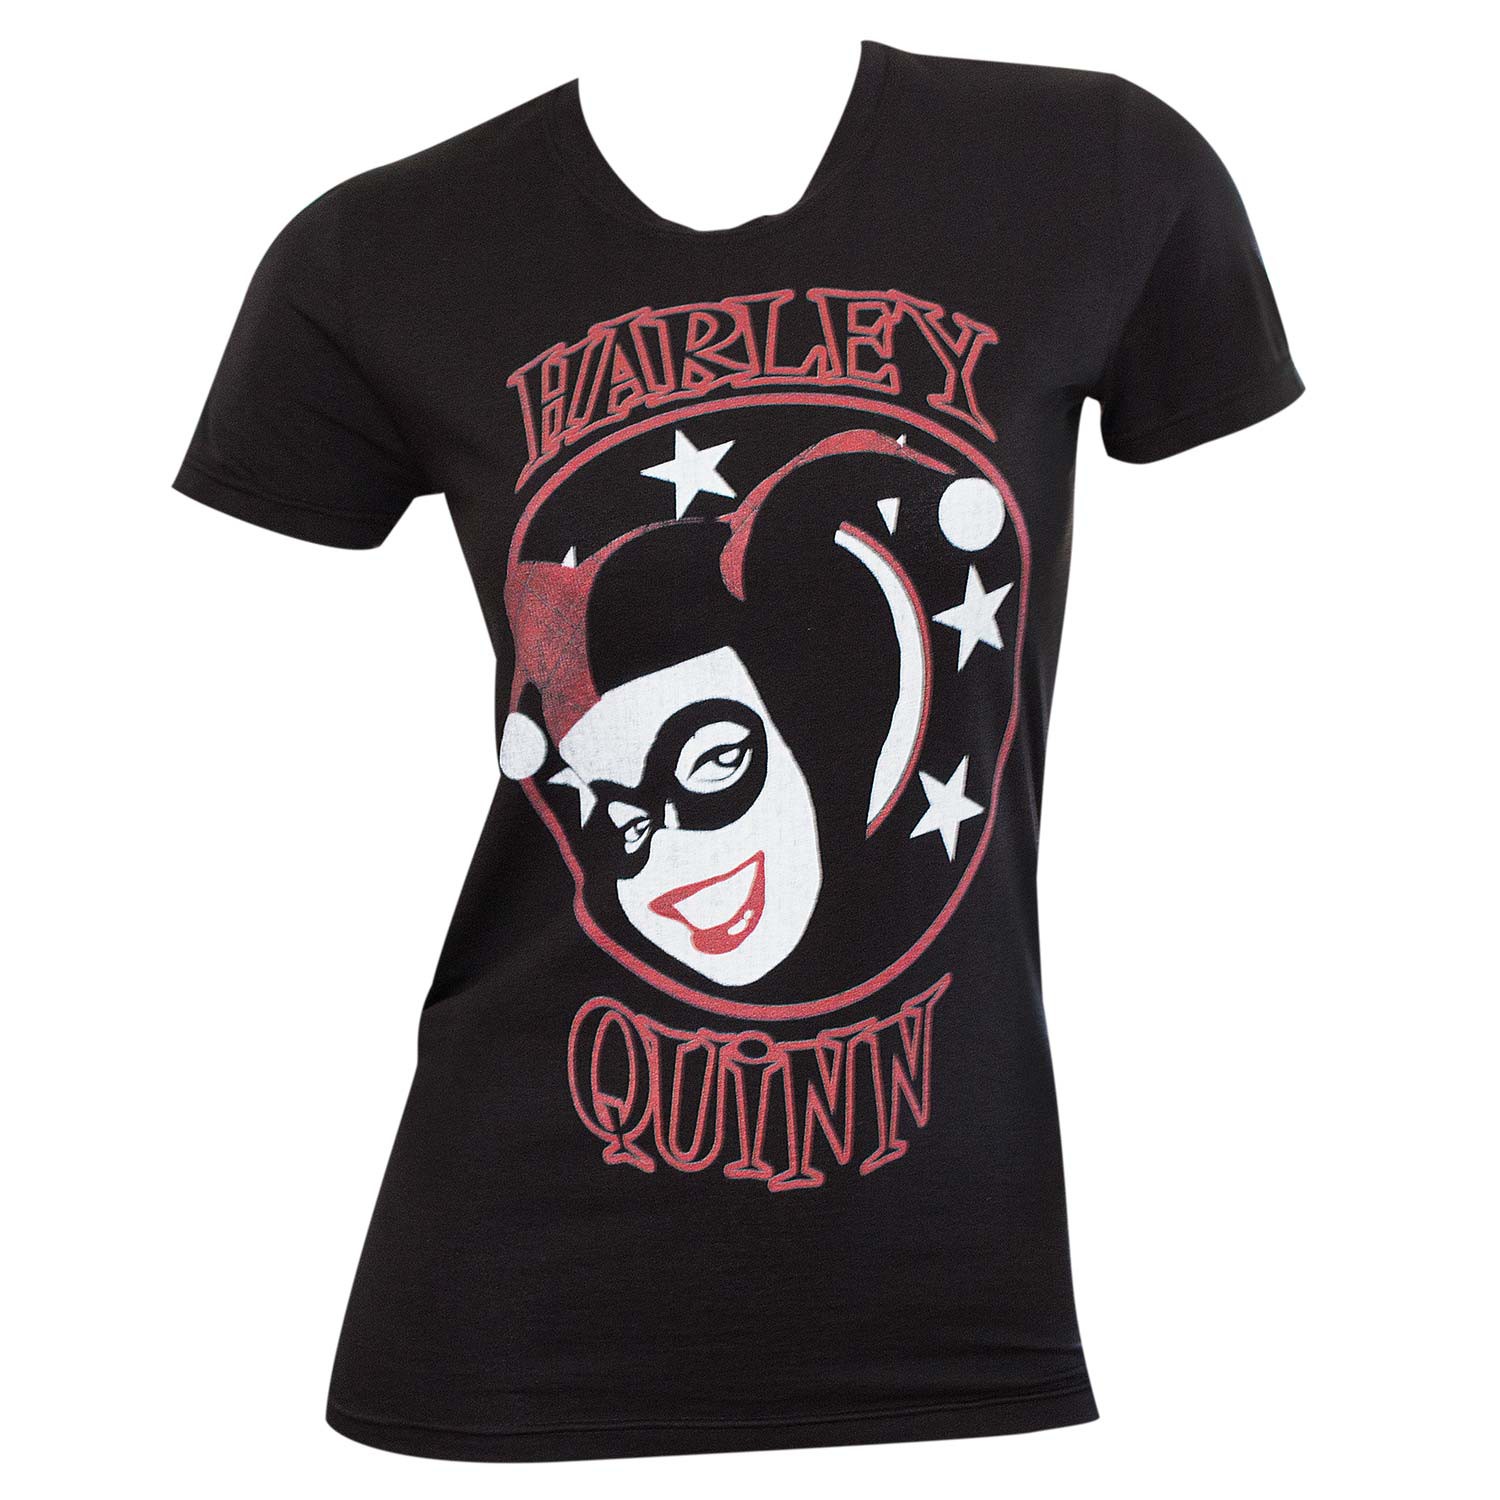 Harley Quinn Comic Women's Black T-Shirt